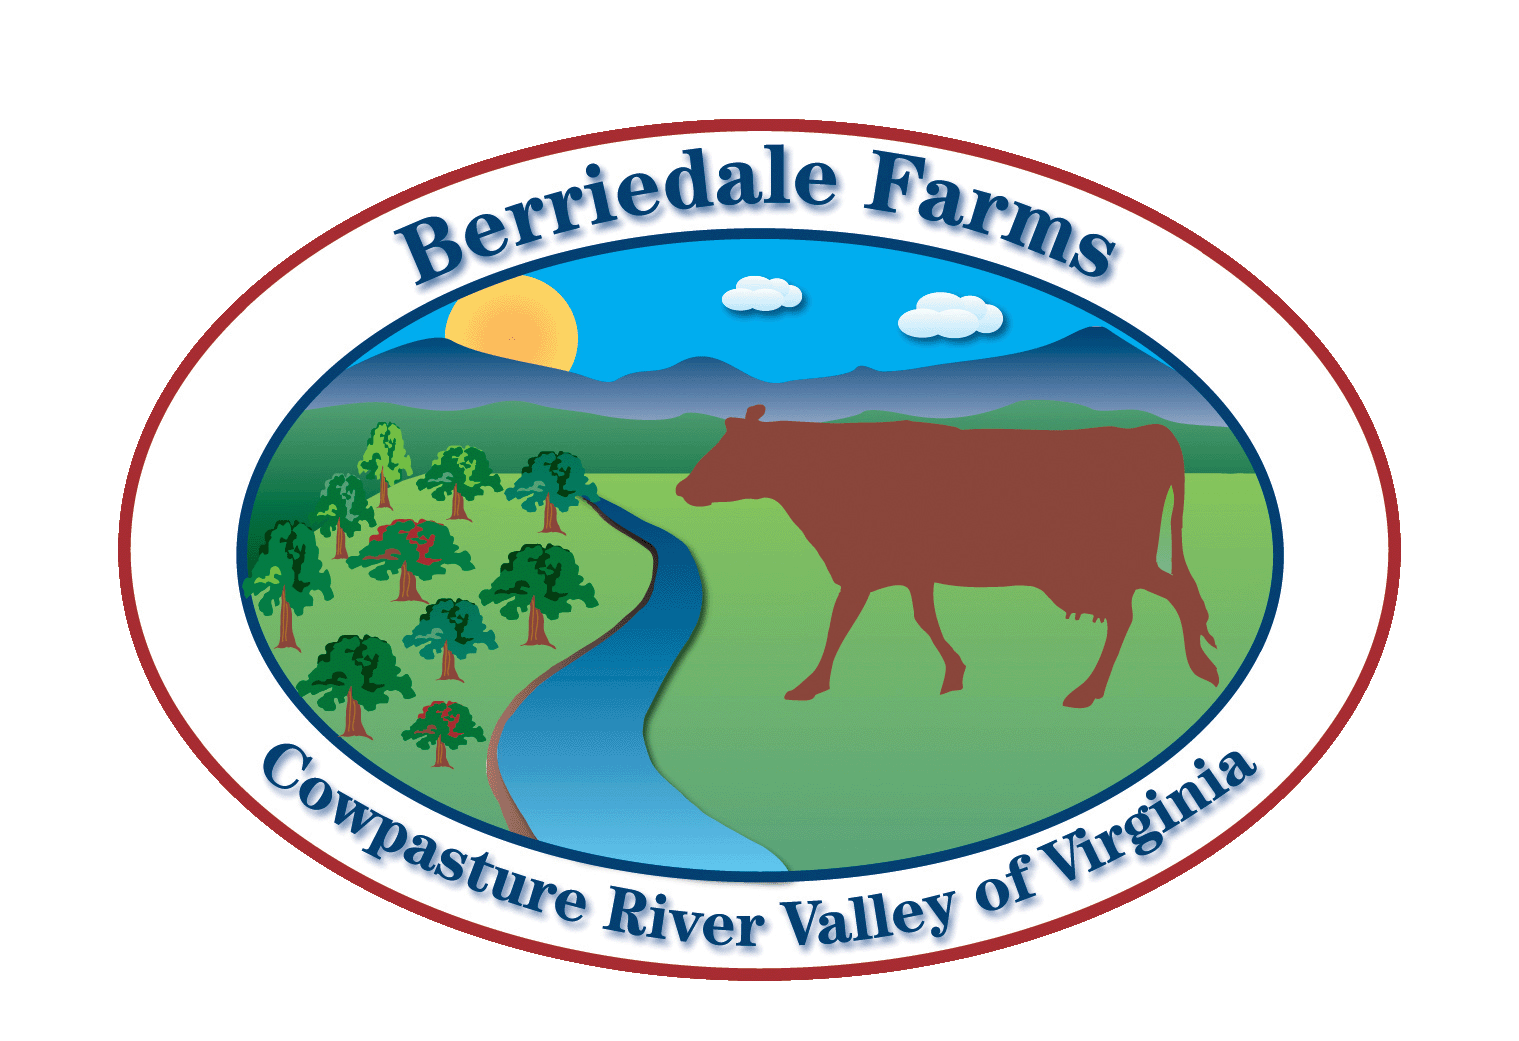 Berriedale Farms - Cowpasture River Valley of Virginia (logo)